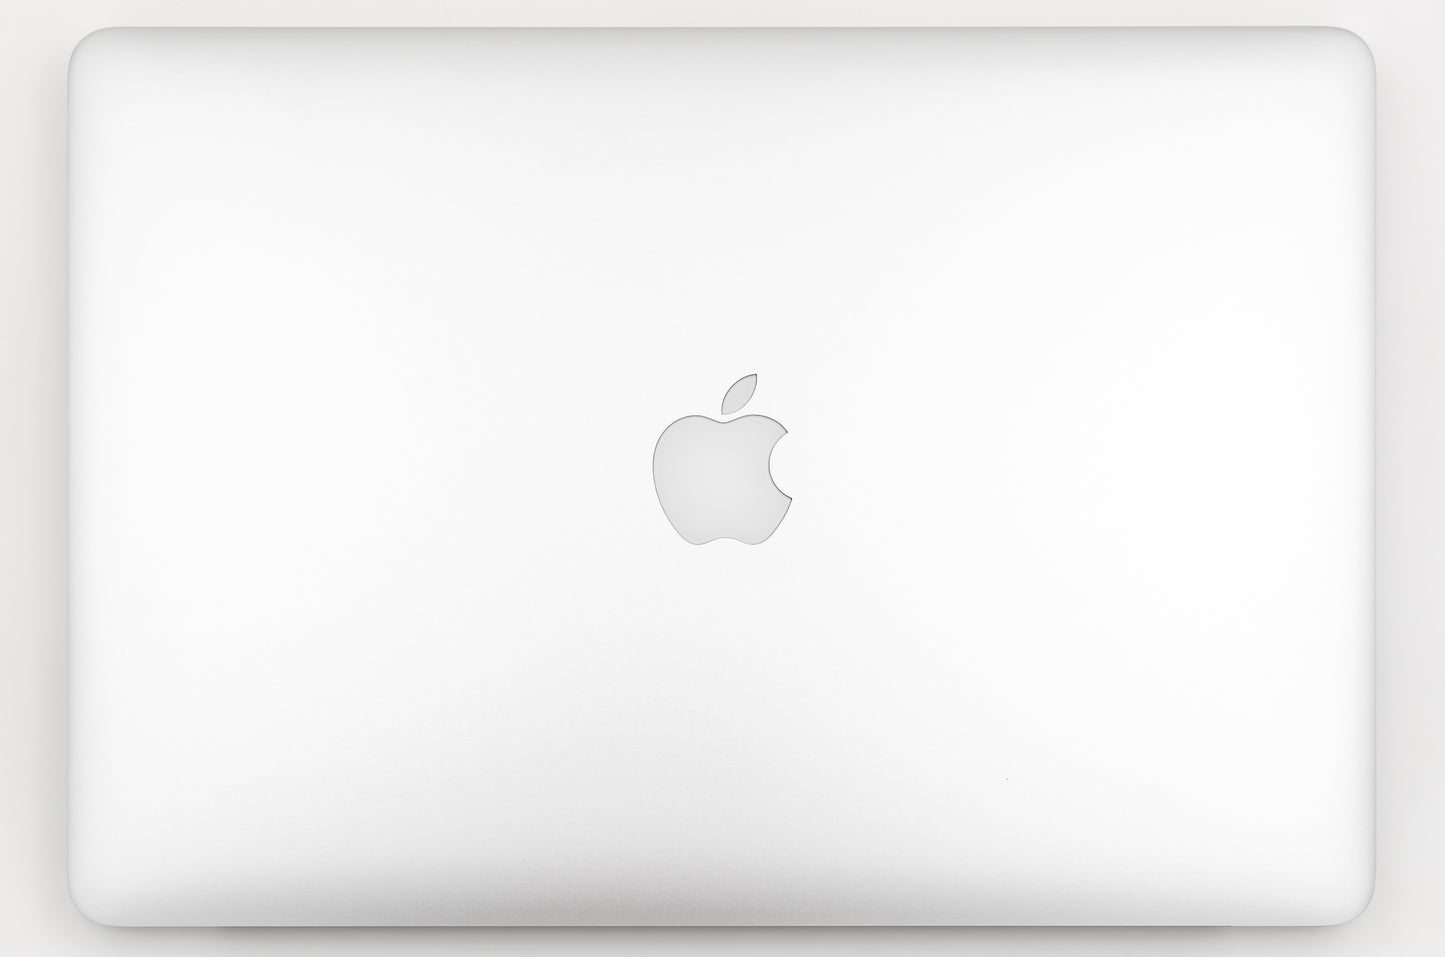 apple-late-2011-15.4-inch-macbook-pro-a1286-aluminum-qci7 - 2.4ghz processor, 8gb ram, hd 6770m - 384mb gpu-md322ll/a-5